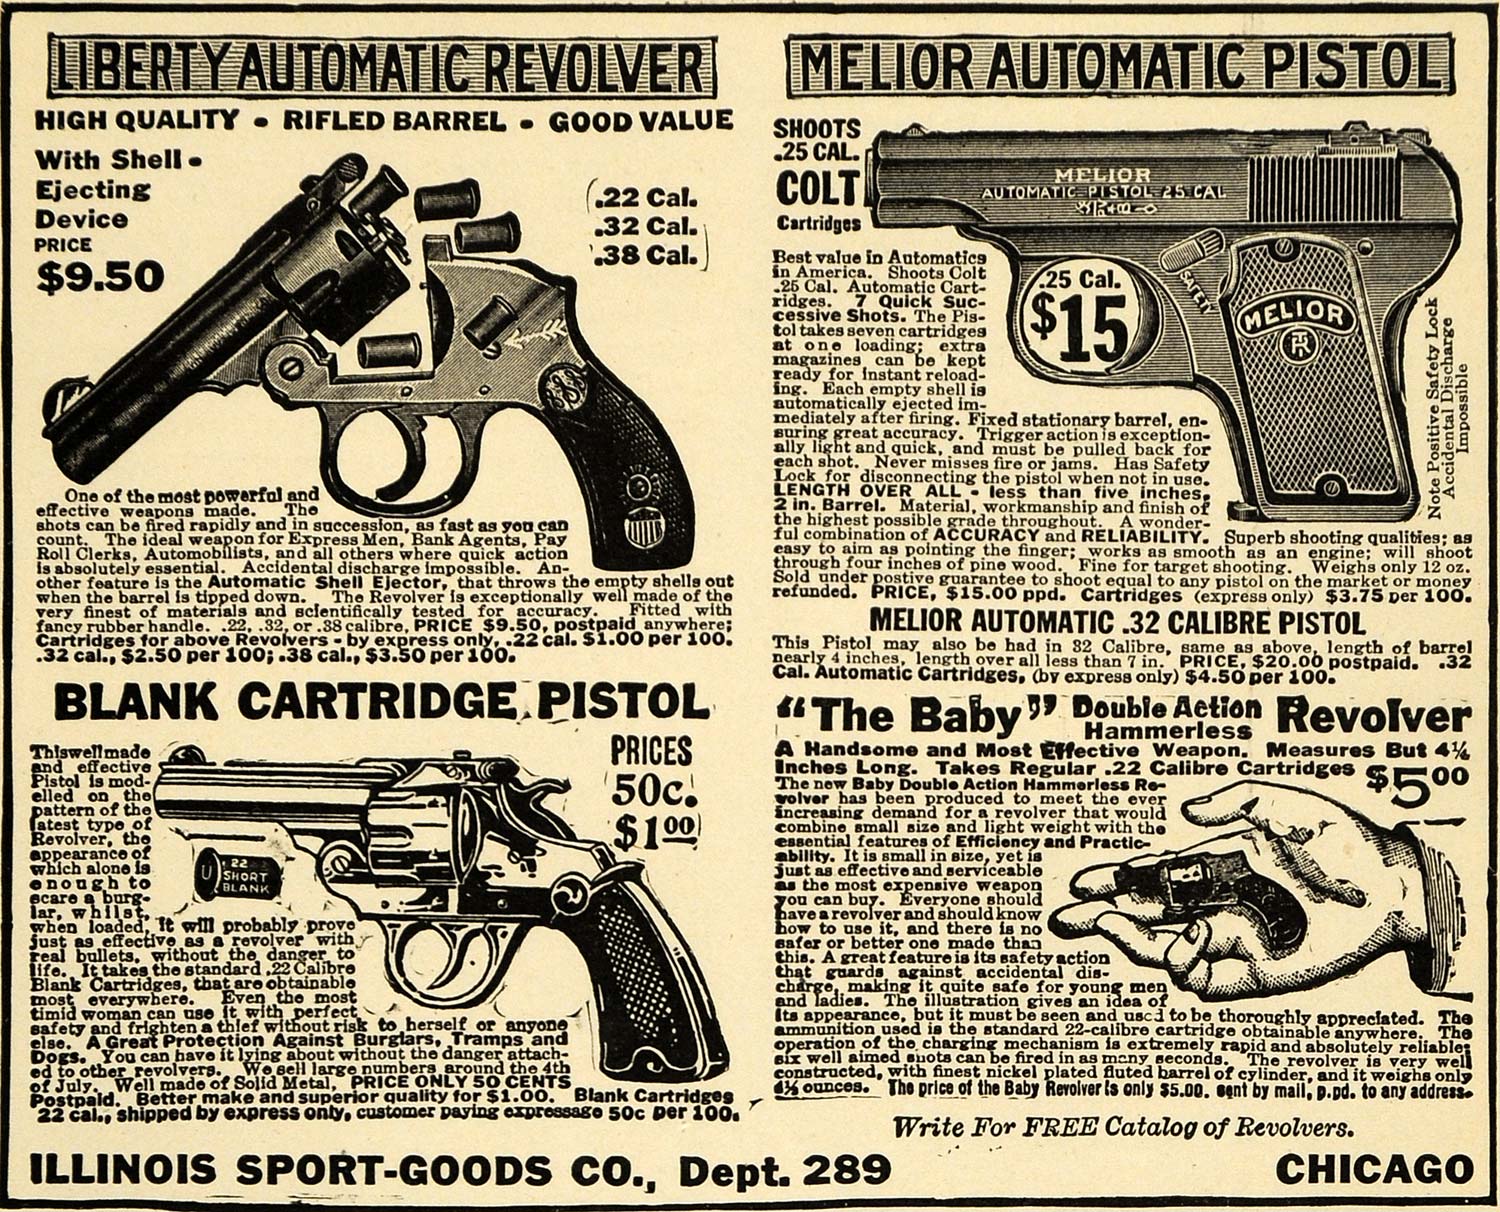 1921 Ad Pistol Rifle Revolver Gun Firearm Sporting Good - ORIGINAL ILW1